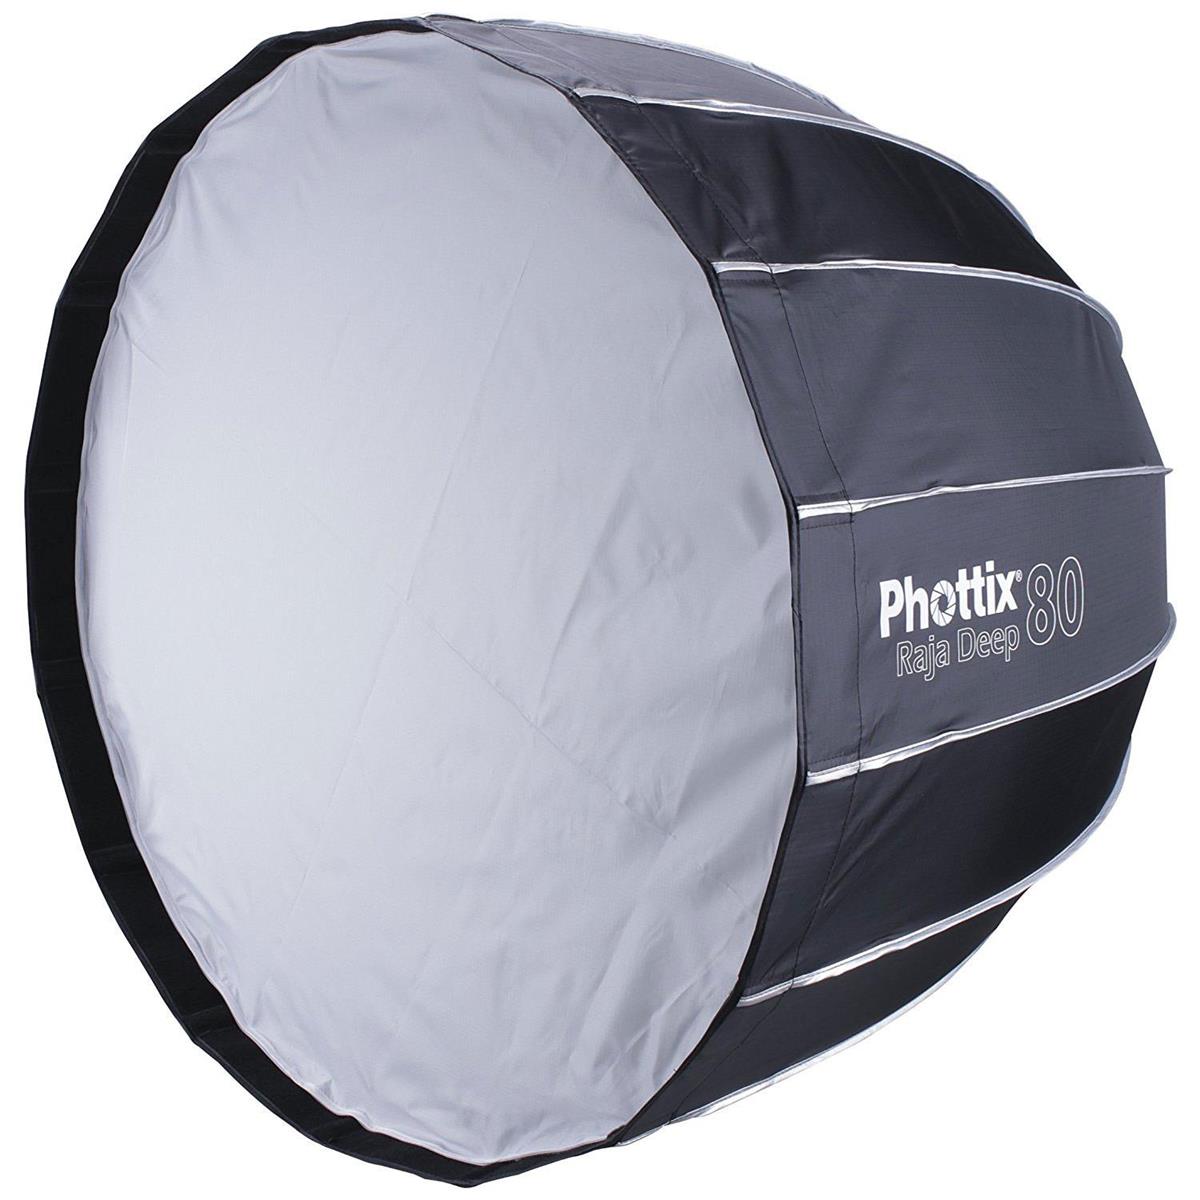 Phottix Raja Deep Parabolic Softbox -32